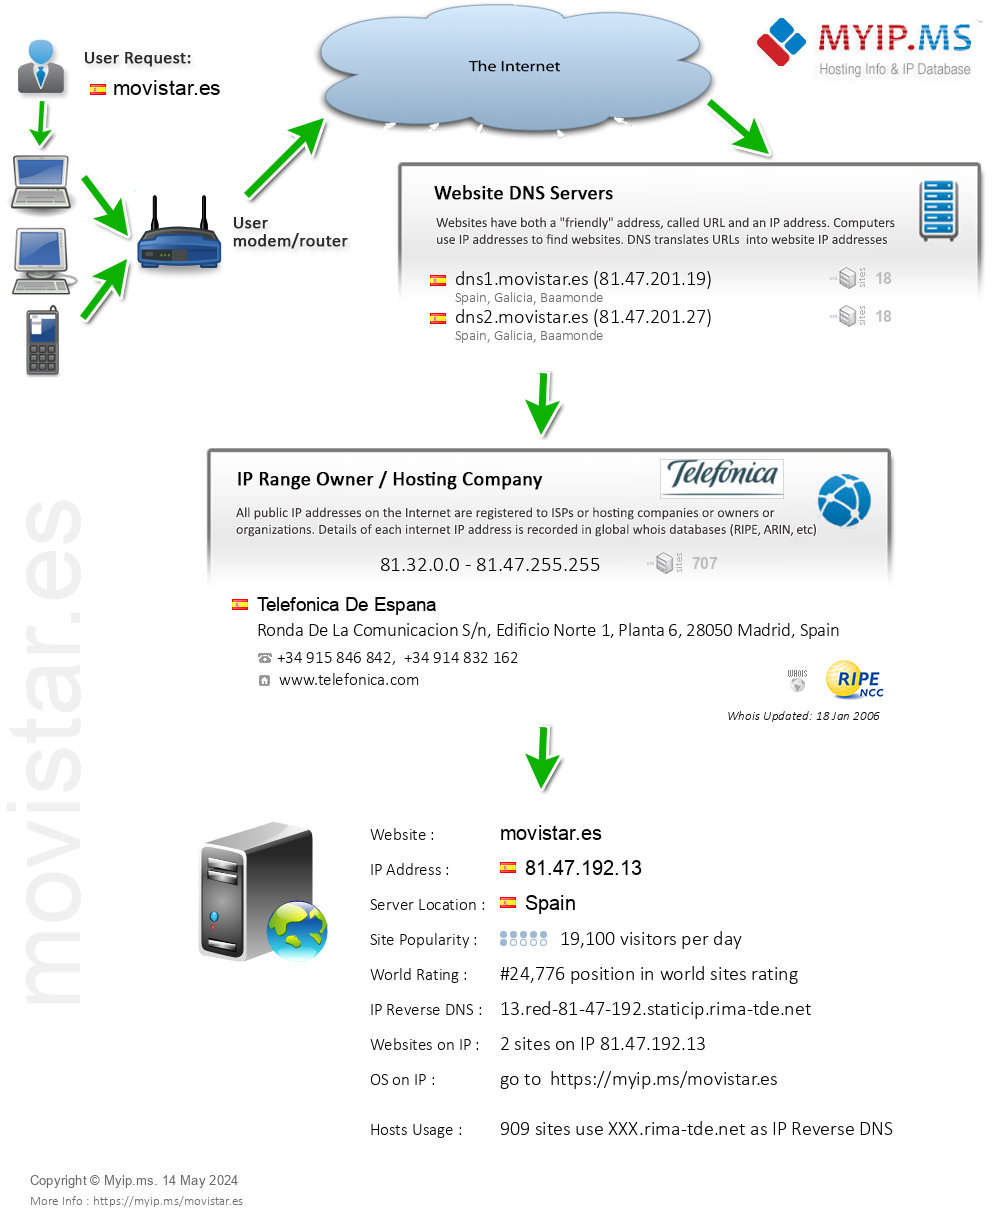 Movistar.es - Website Hosting Visual IP Diagram